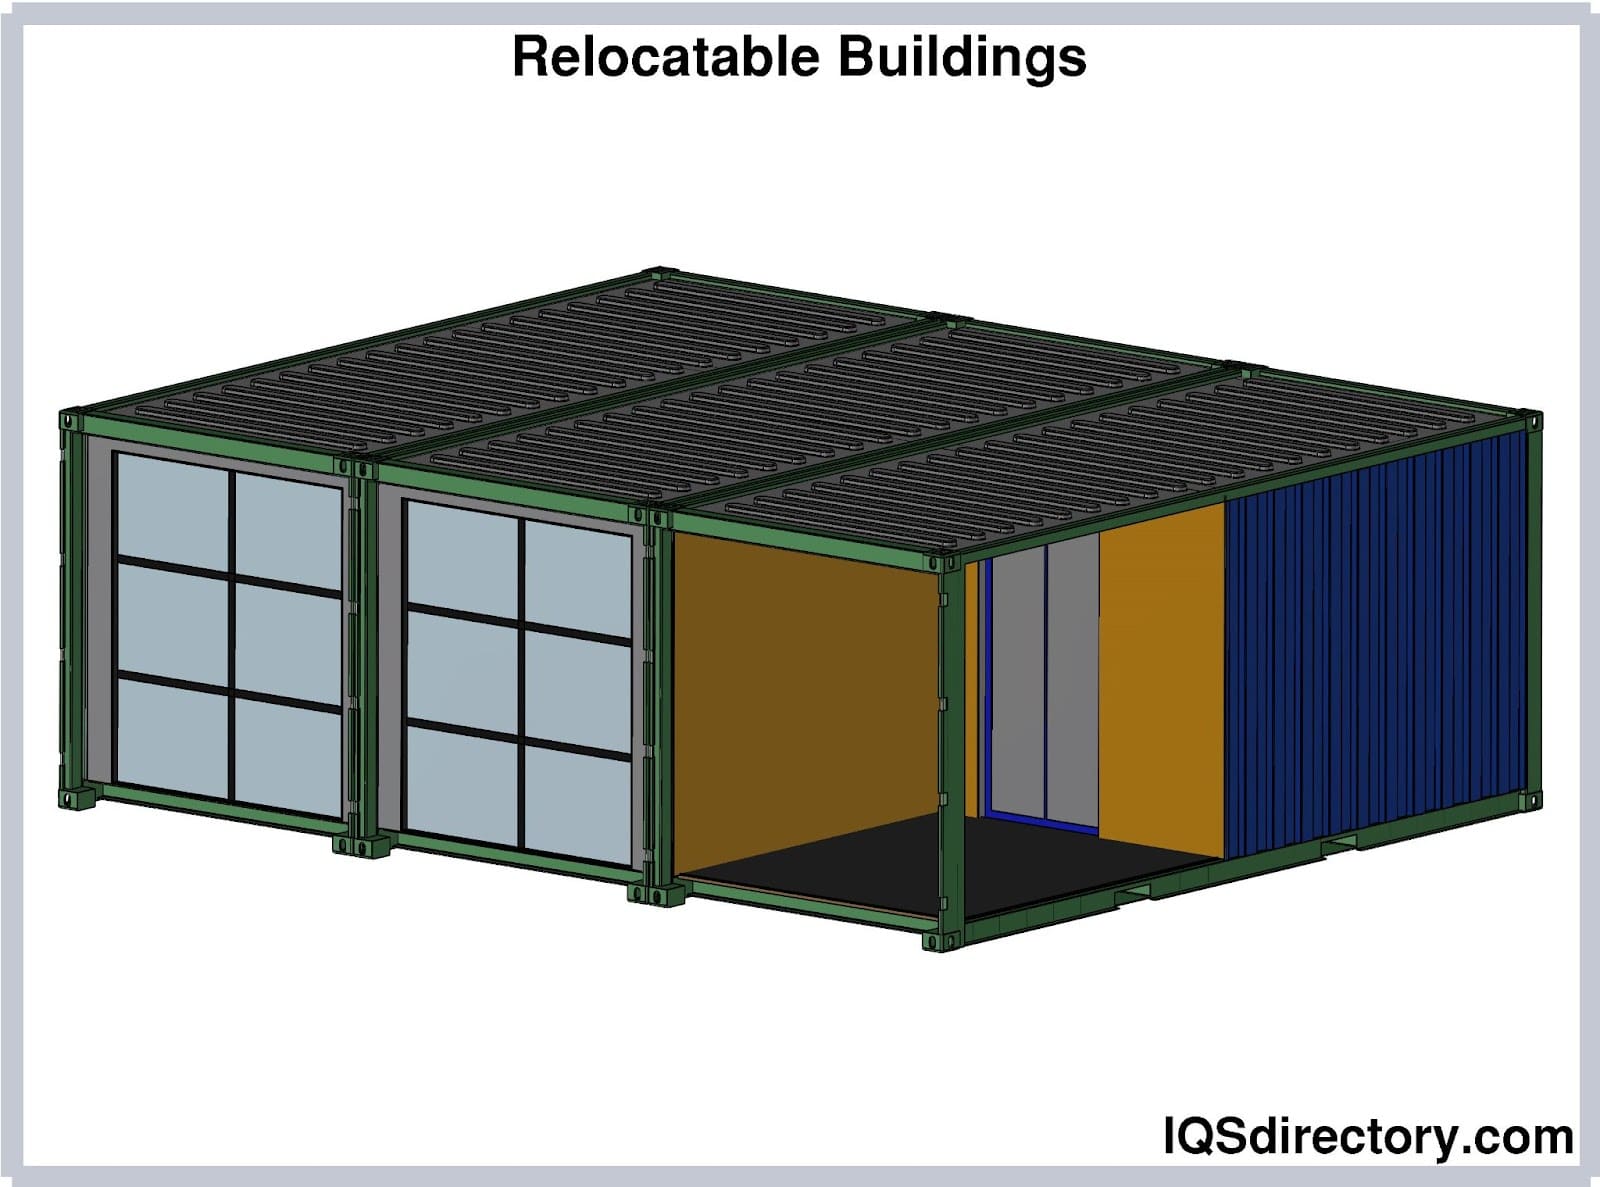 Relocatable Buildings